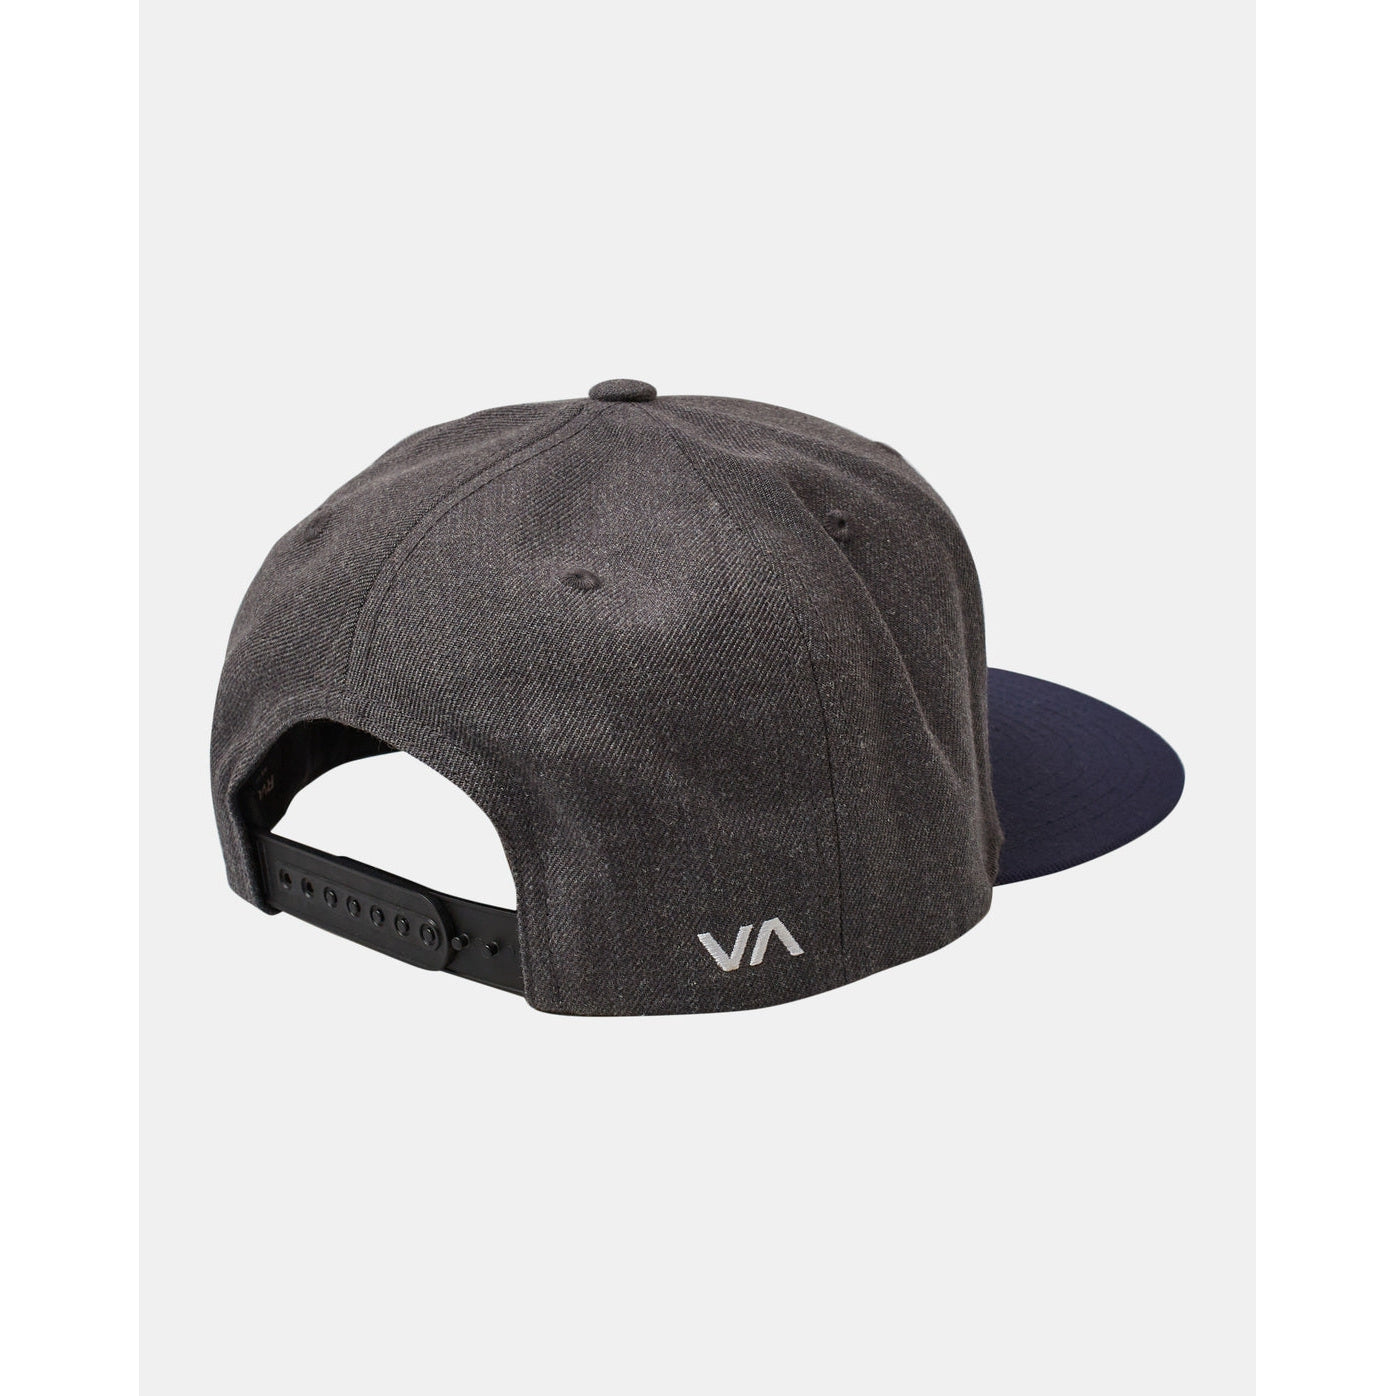 RVCA T Snap II M Hats